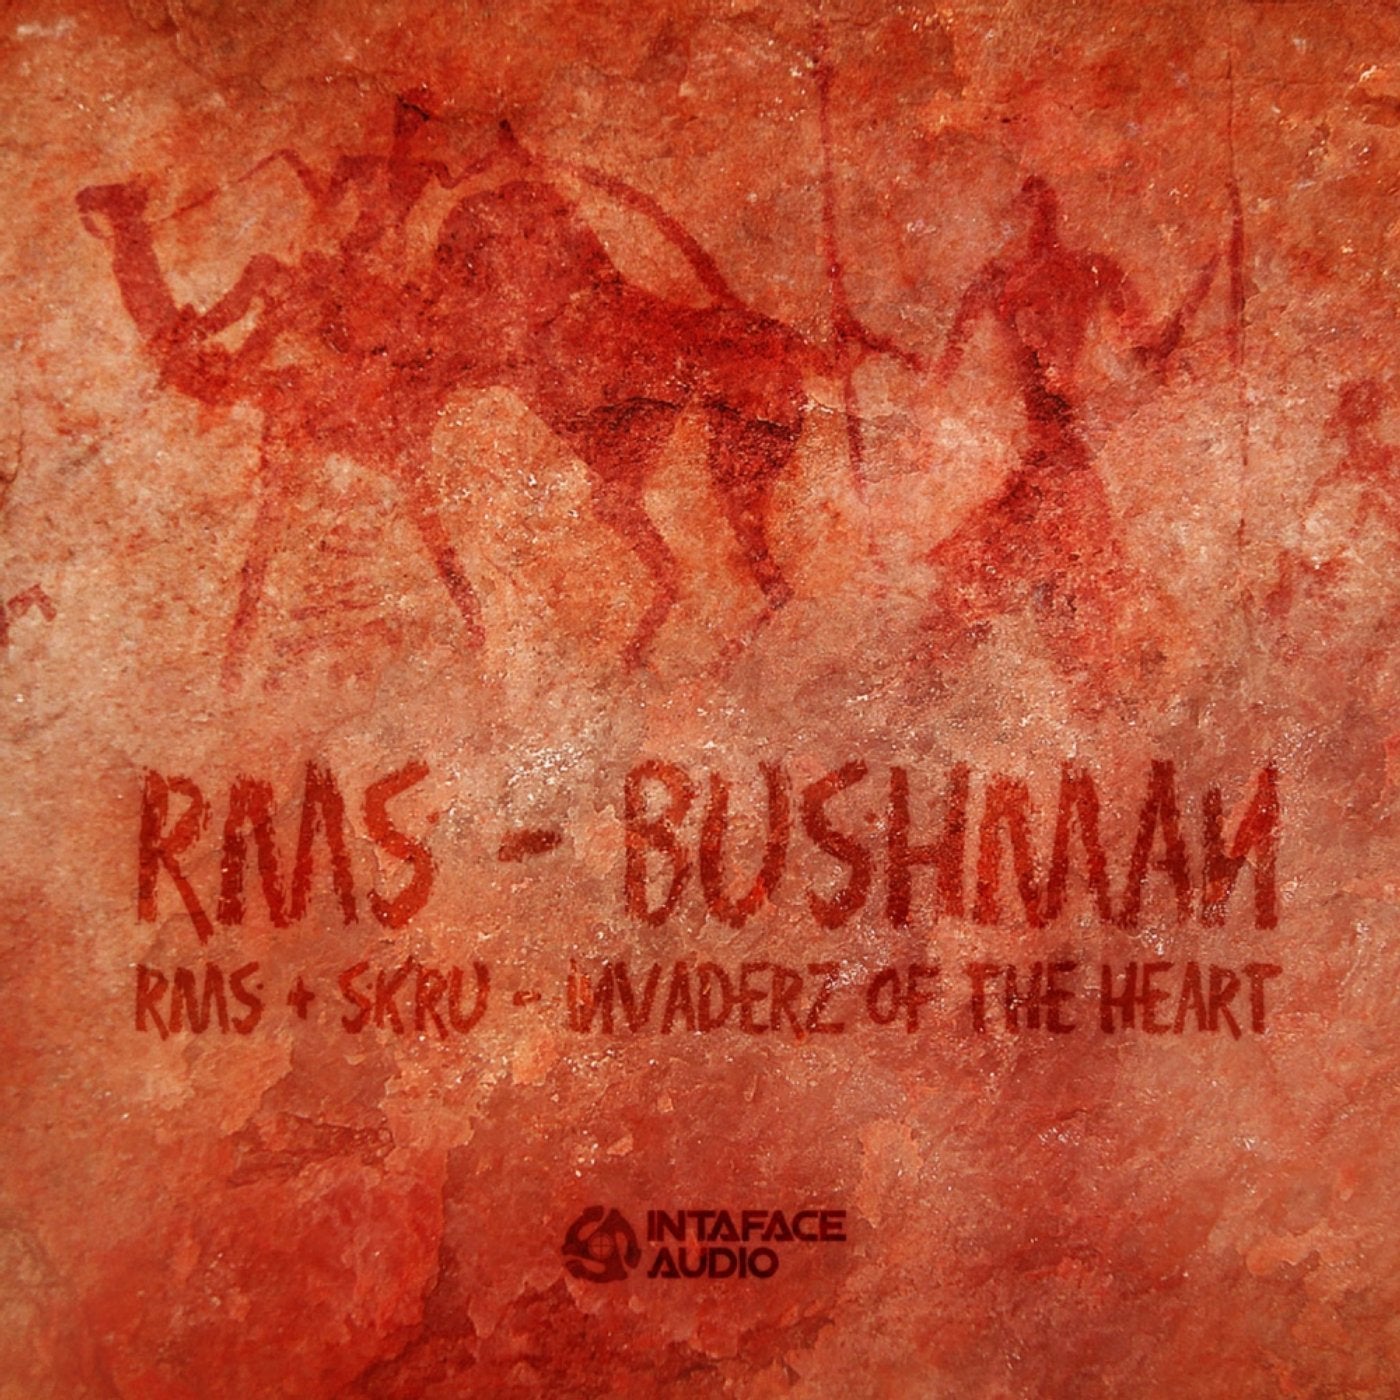 Bushman / Invaderz of The Heart